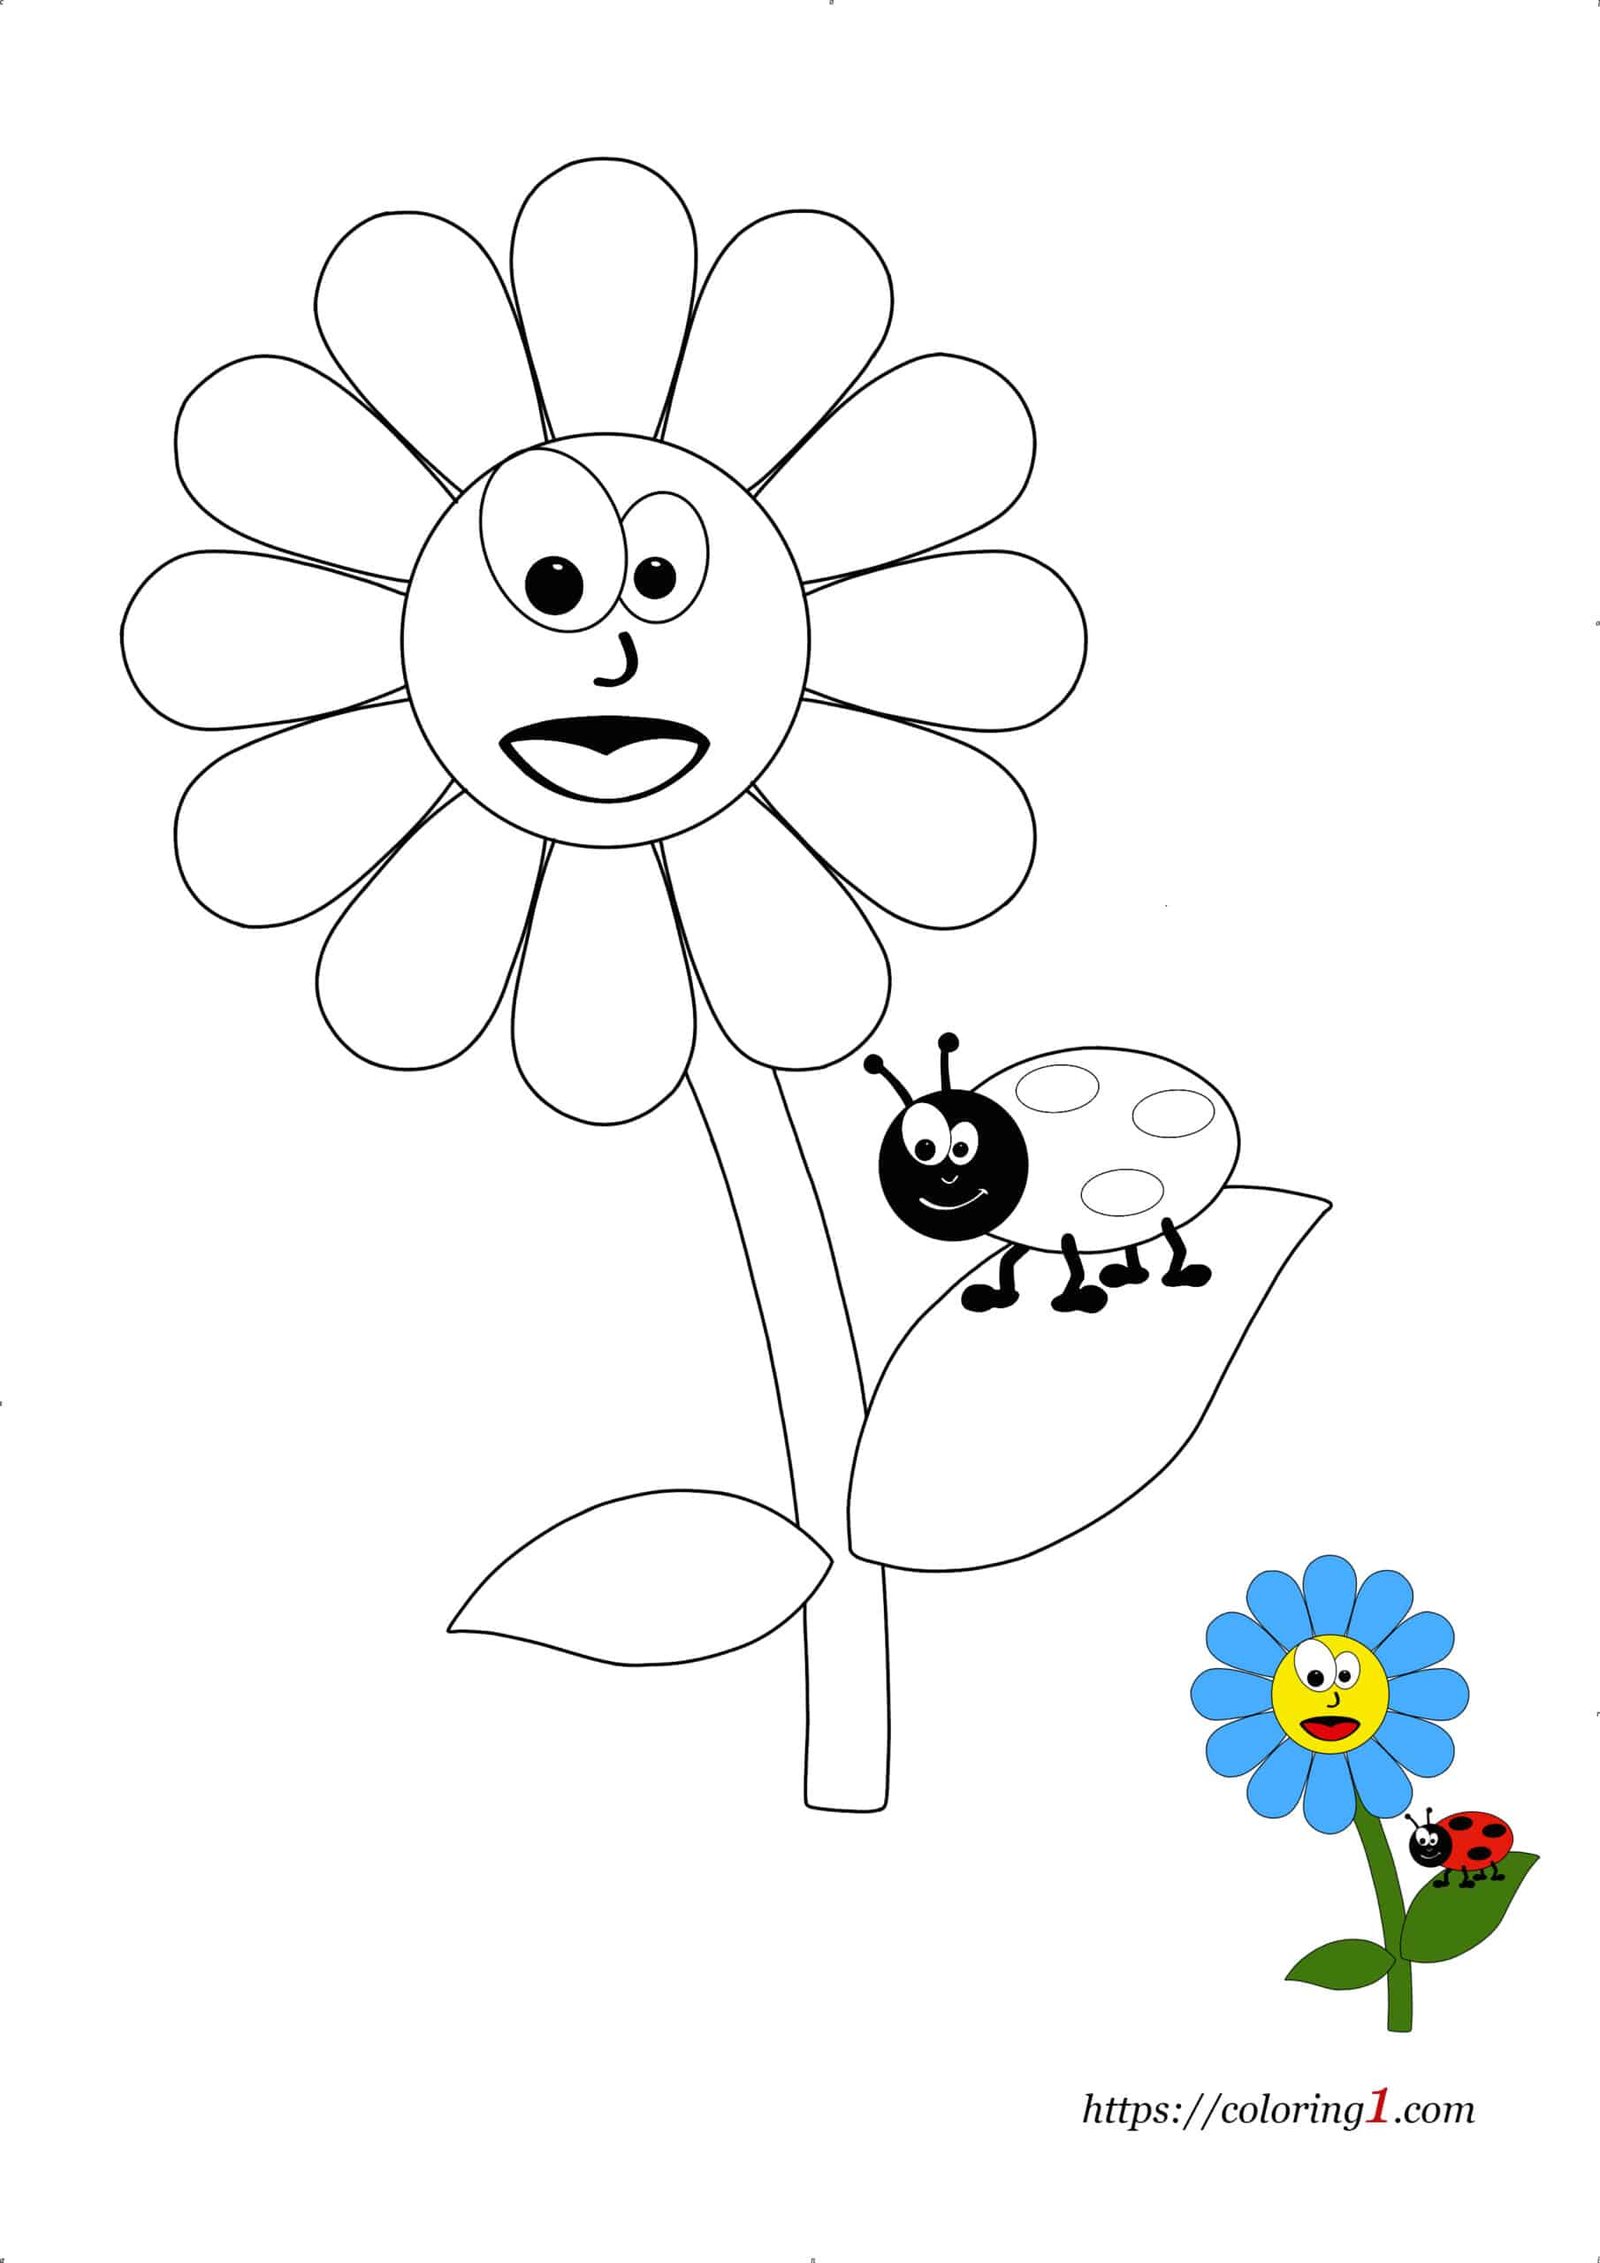 Preschool Flower and Ladybug free printable coloring page for kids